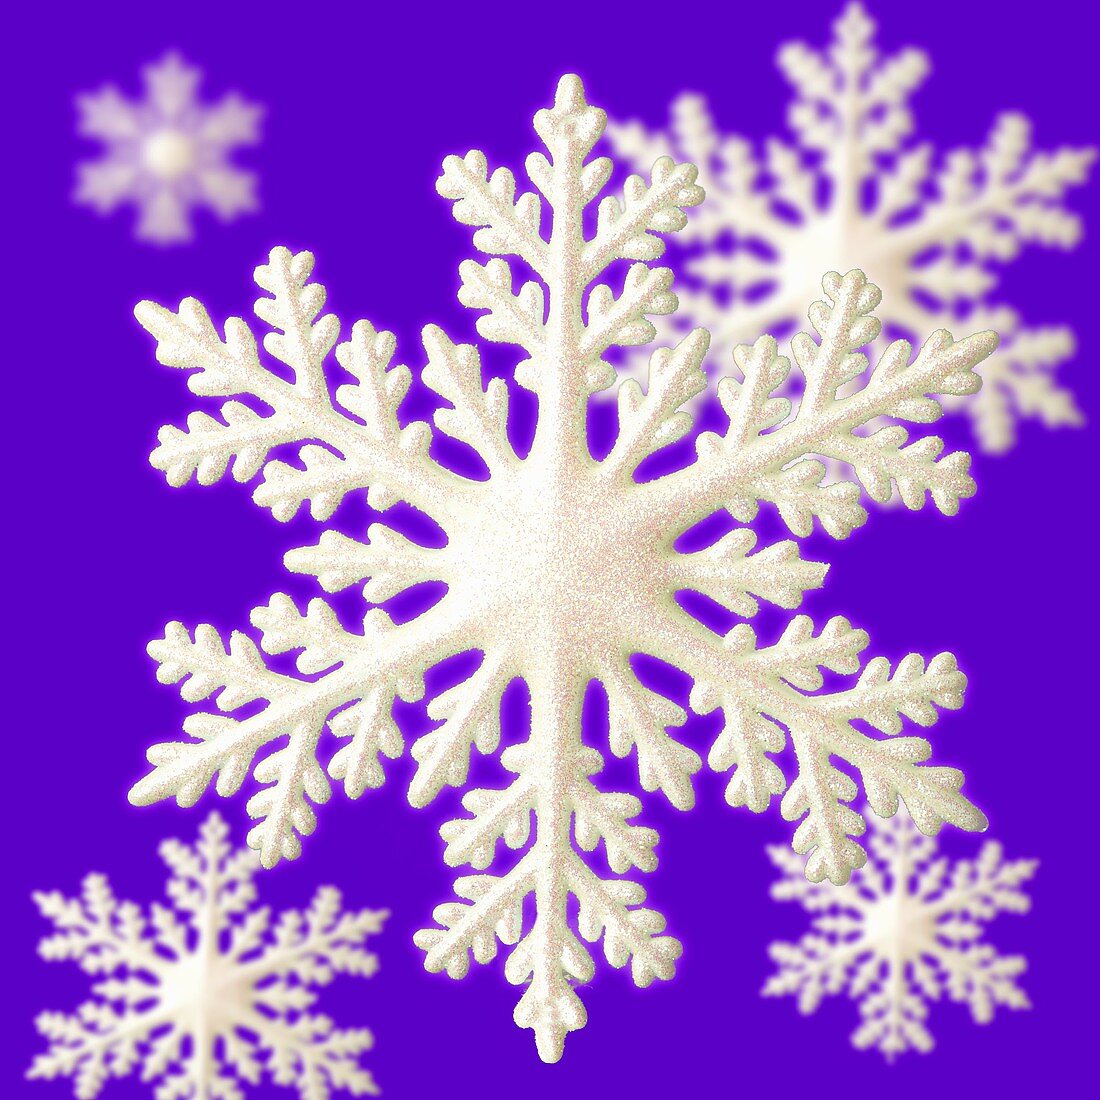 Snowflake decorations